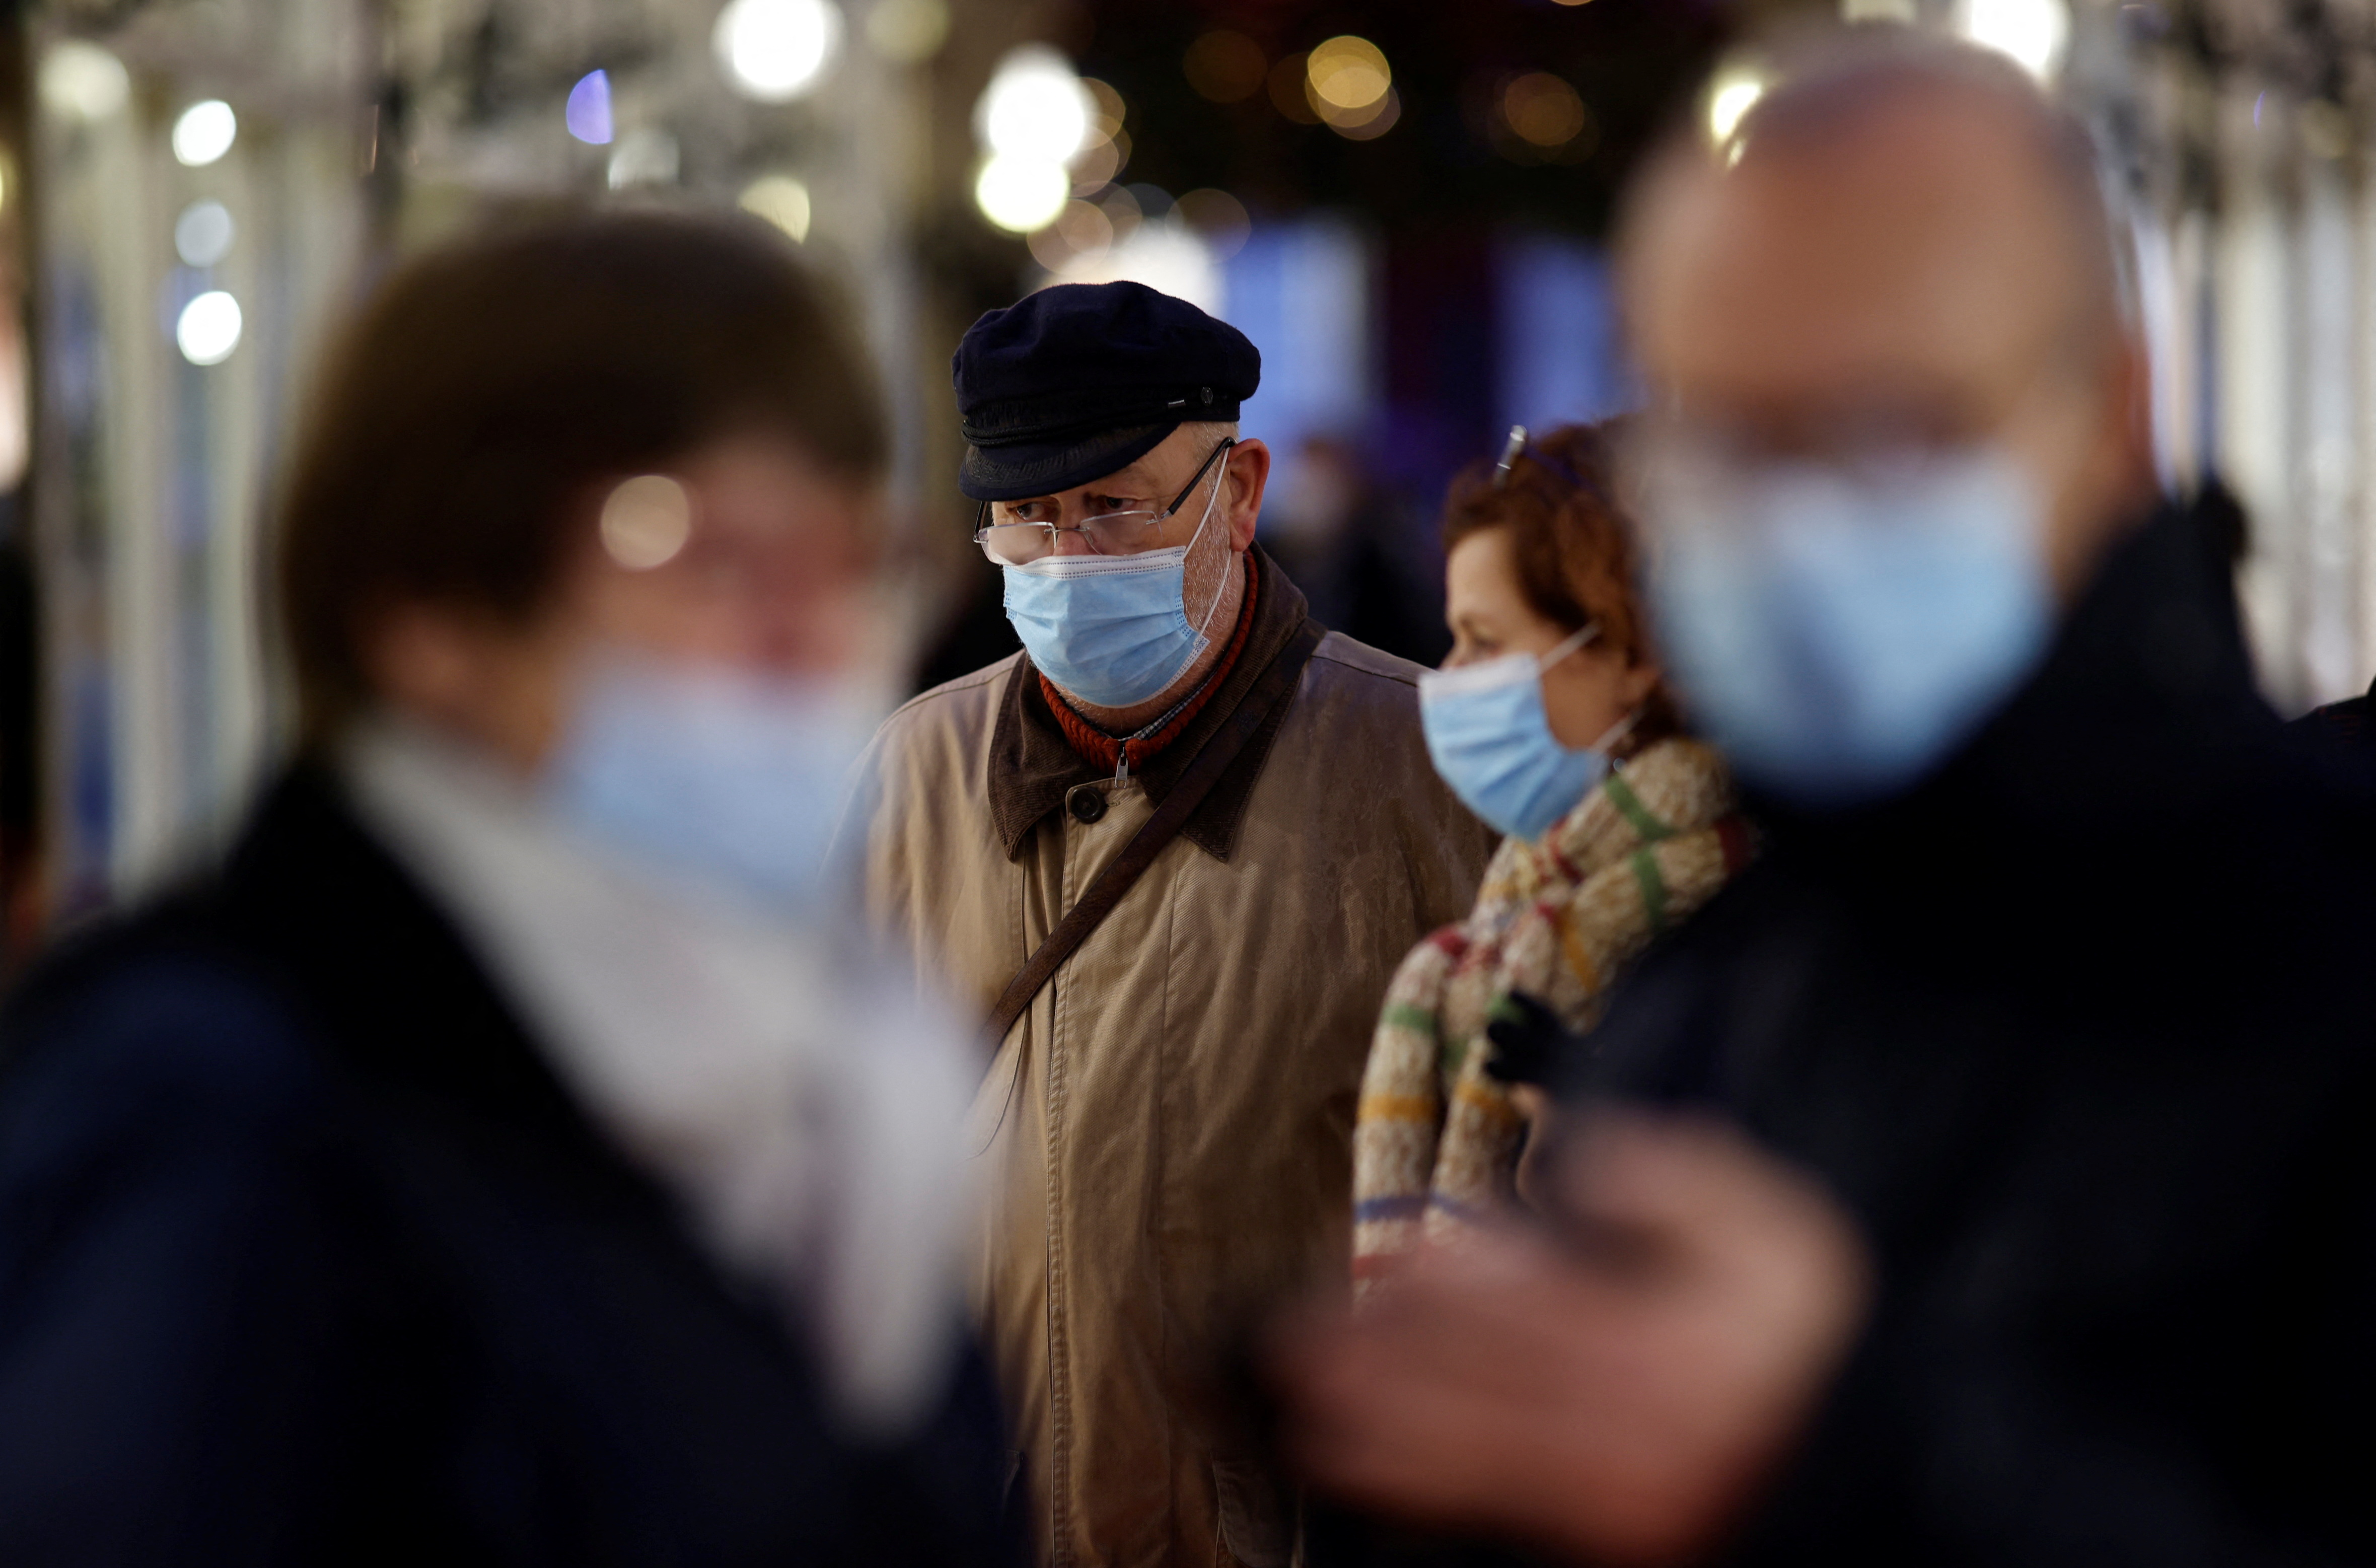 People wearing face masks walk in Nantes amid the coronavirus disease (COVID-19) outbreak in France, December 9, 2021. REUTERS/Stephane Mahe